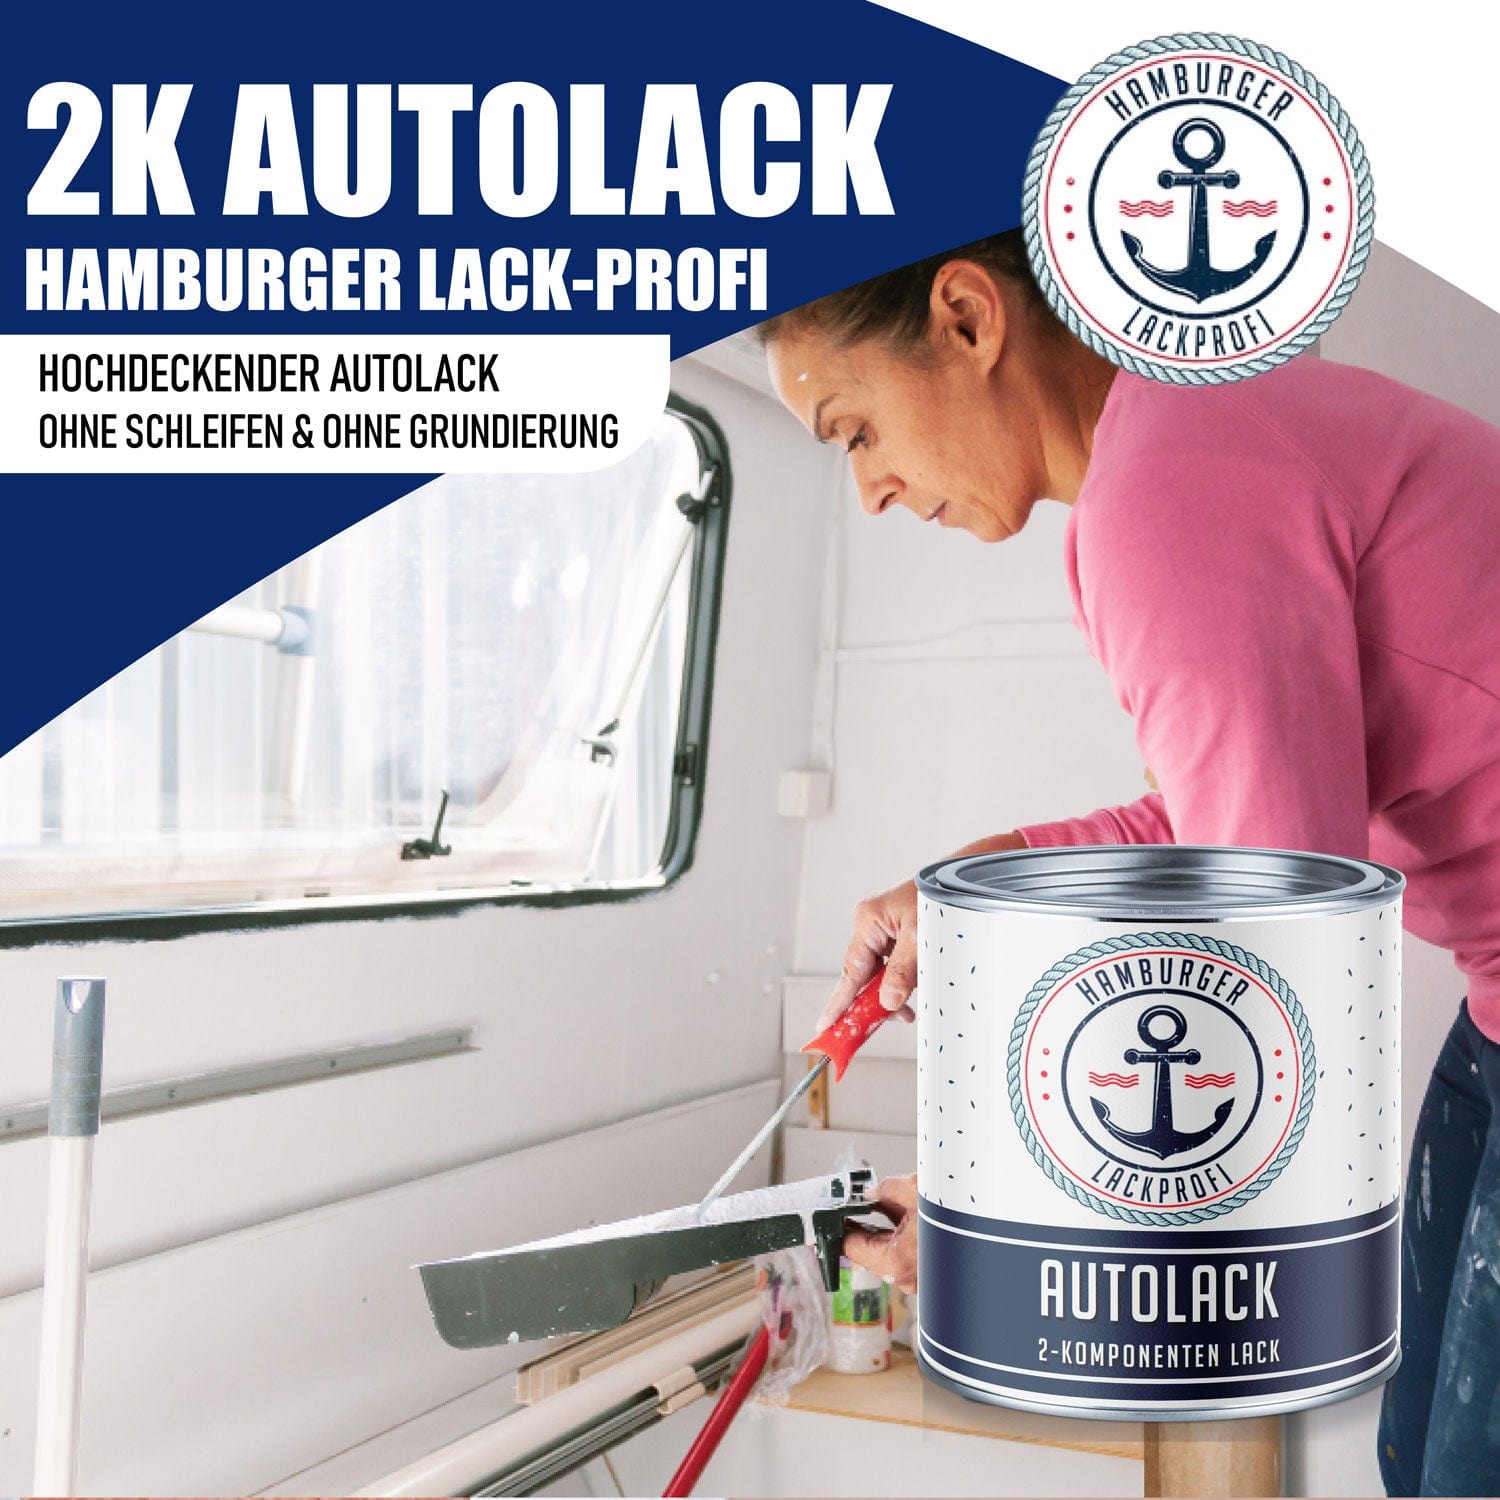 Hamburger Lack-Profi Lacke & Beschichtungen Hamburger Lack-Profi 2K Autolack in Signalbraun RAL 8002 mit Lackierset (X300) & Verdünnung (1 L) - 30% Sparangebot